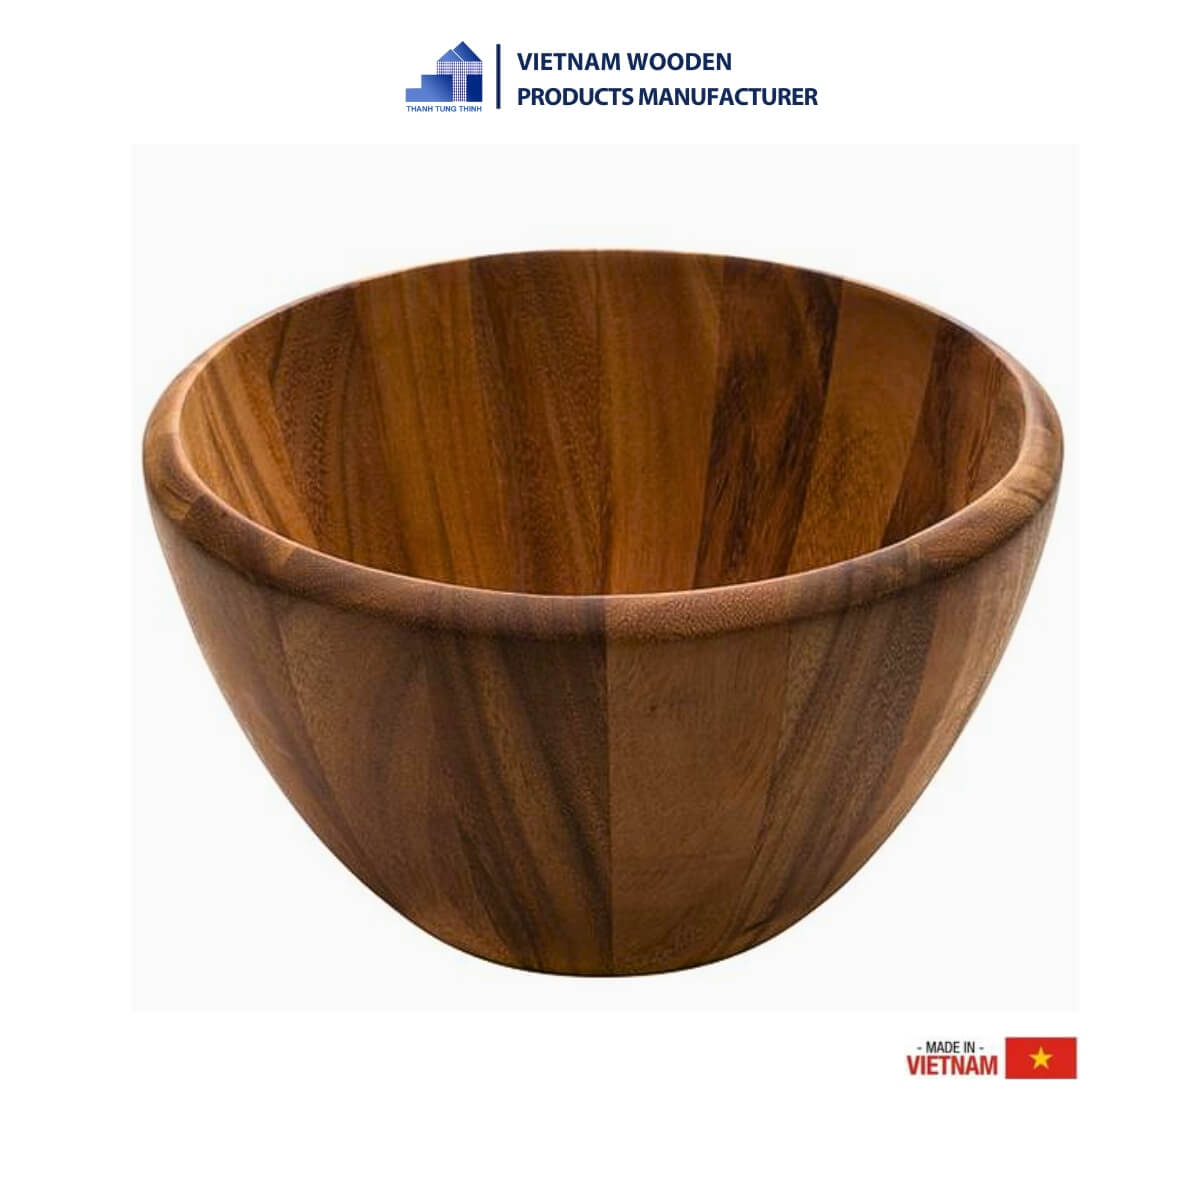 Wooden Bowls vvv